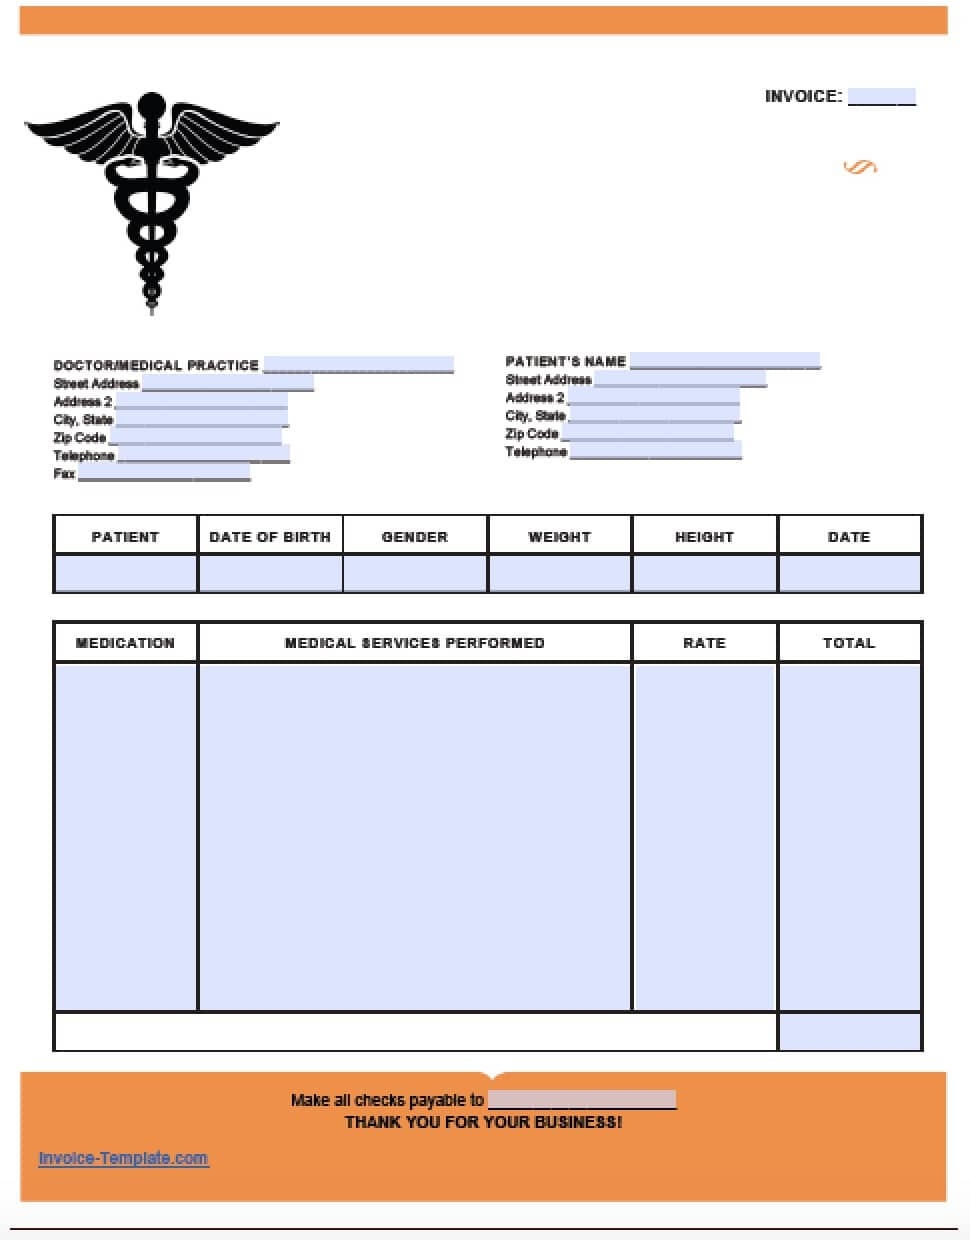 Medical Invoice Sample * Invoice Template Ideas